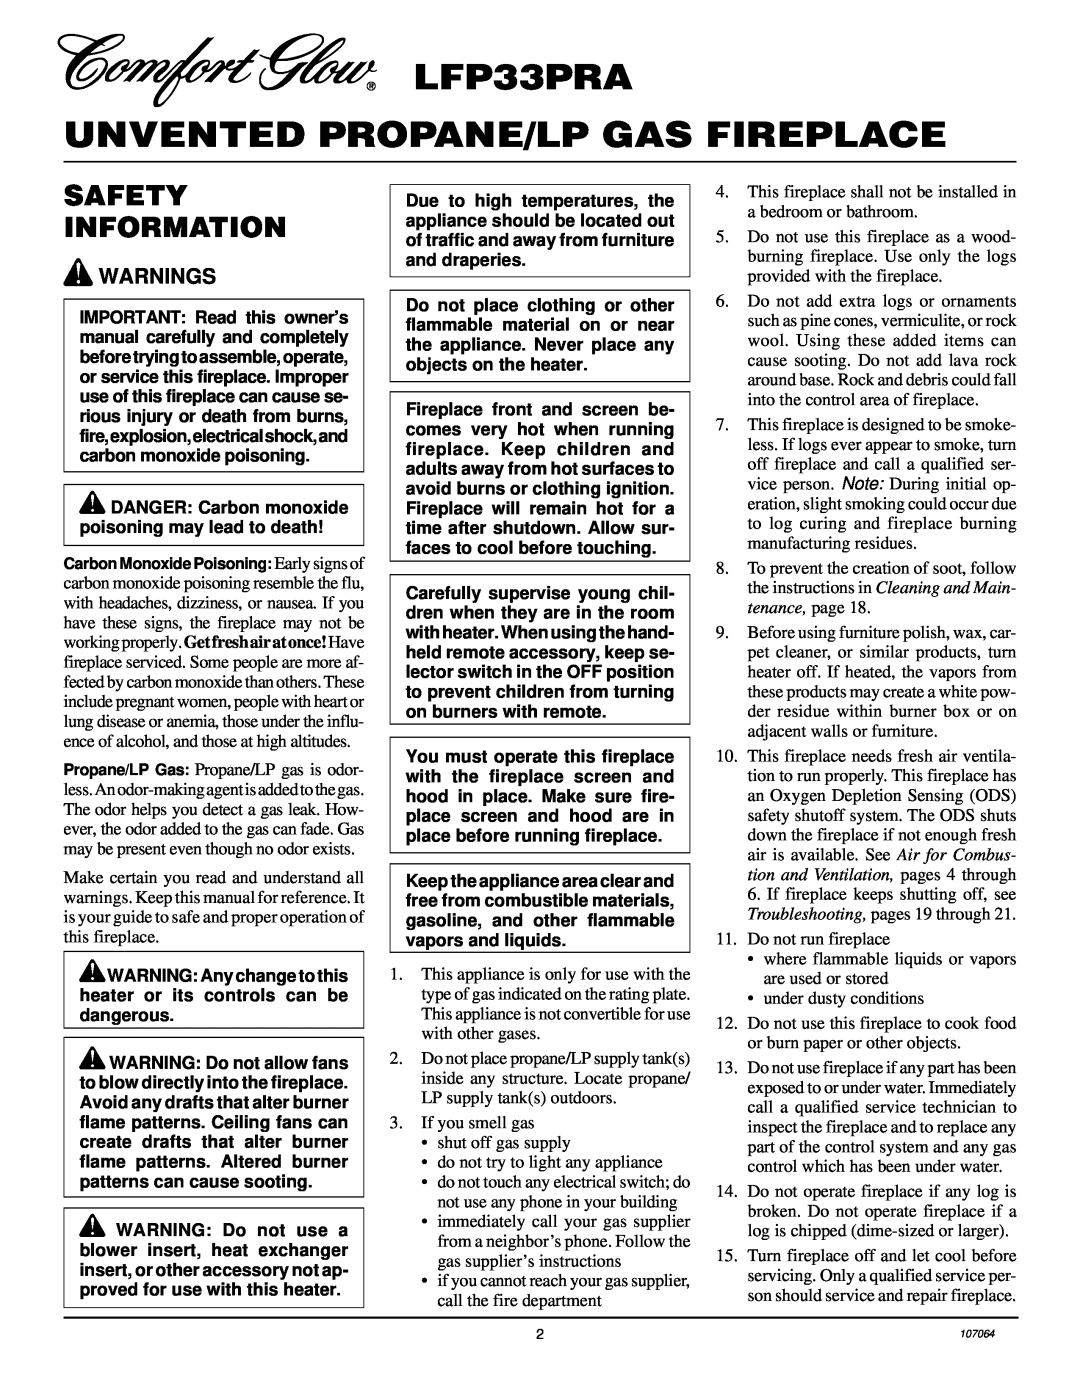 Desa installation manual LFP33PRA UNVENTED PROPANE/LP GAS FIREPLACE, Safety Information, Warnings 